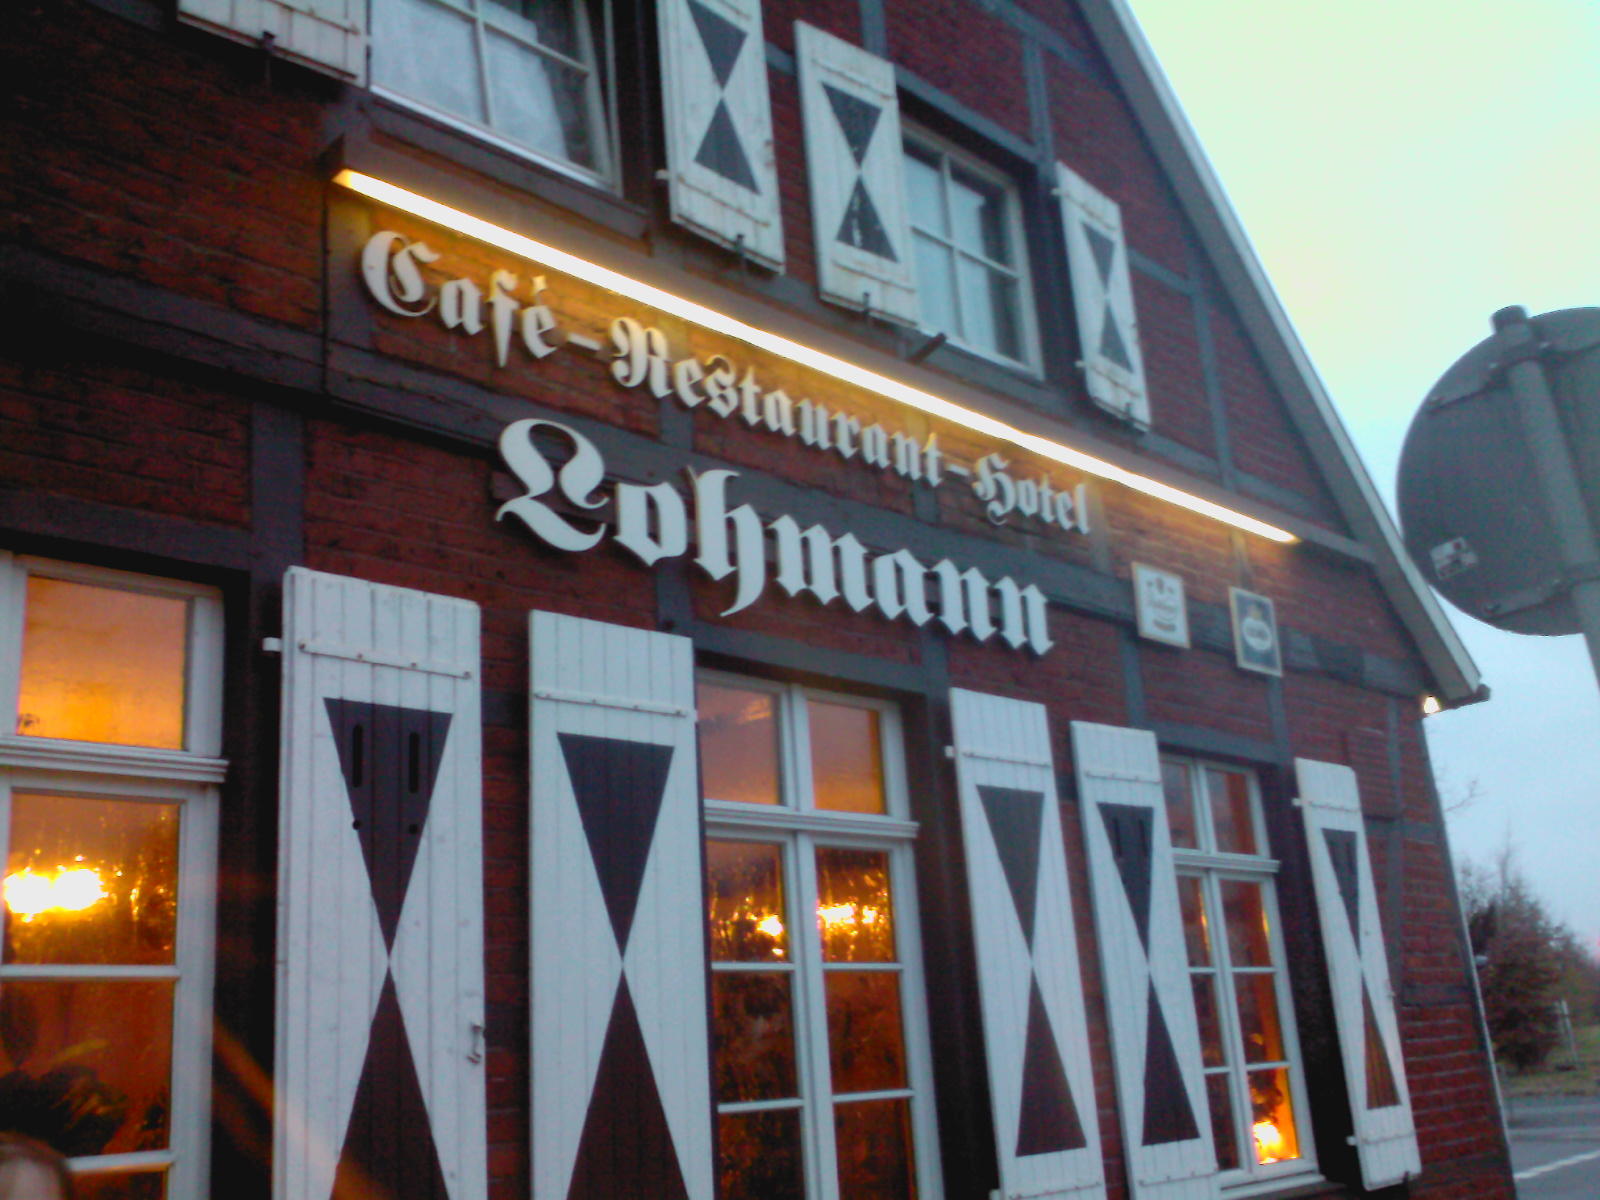 Café-Restaurant-Hotel
Lohmann